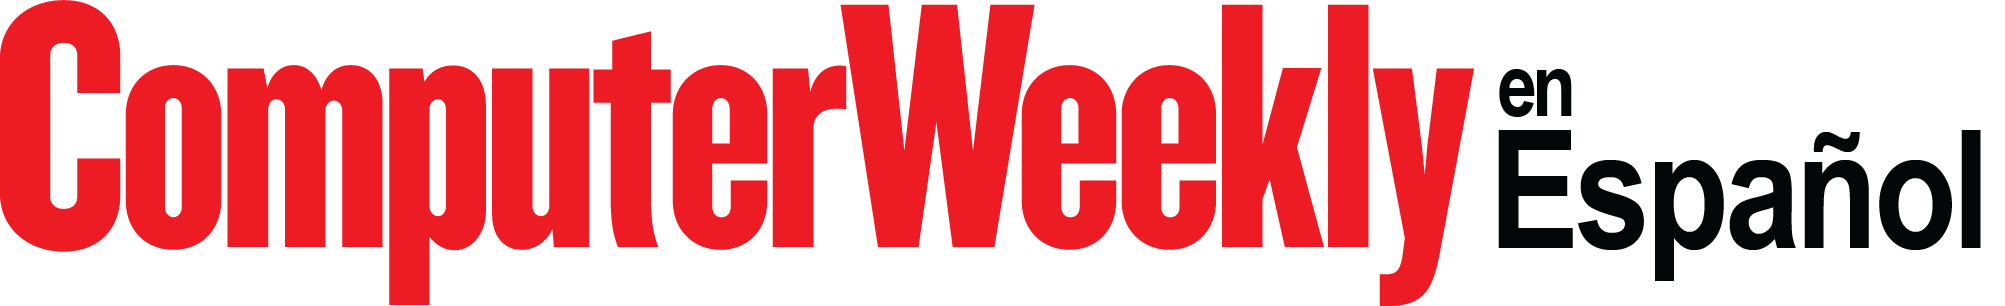 Computer Weekly en Español